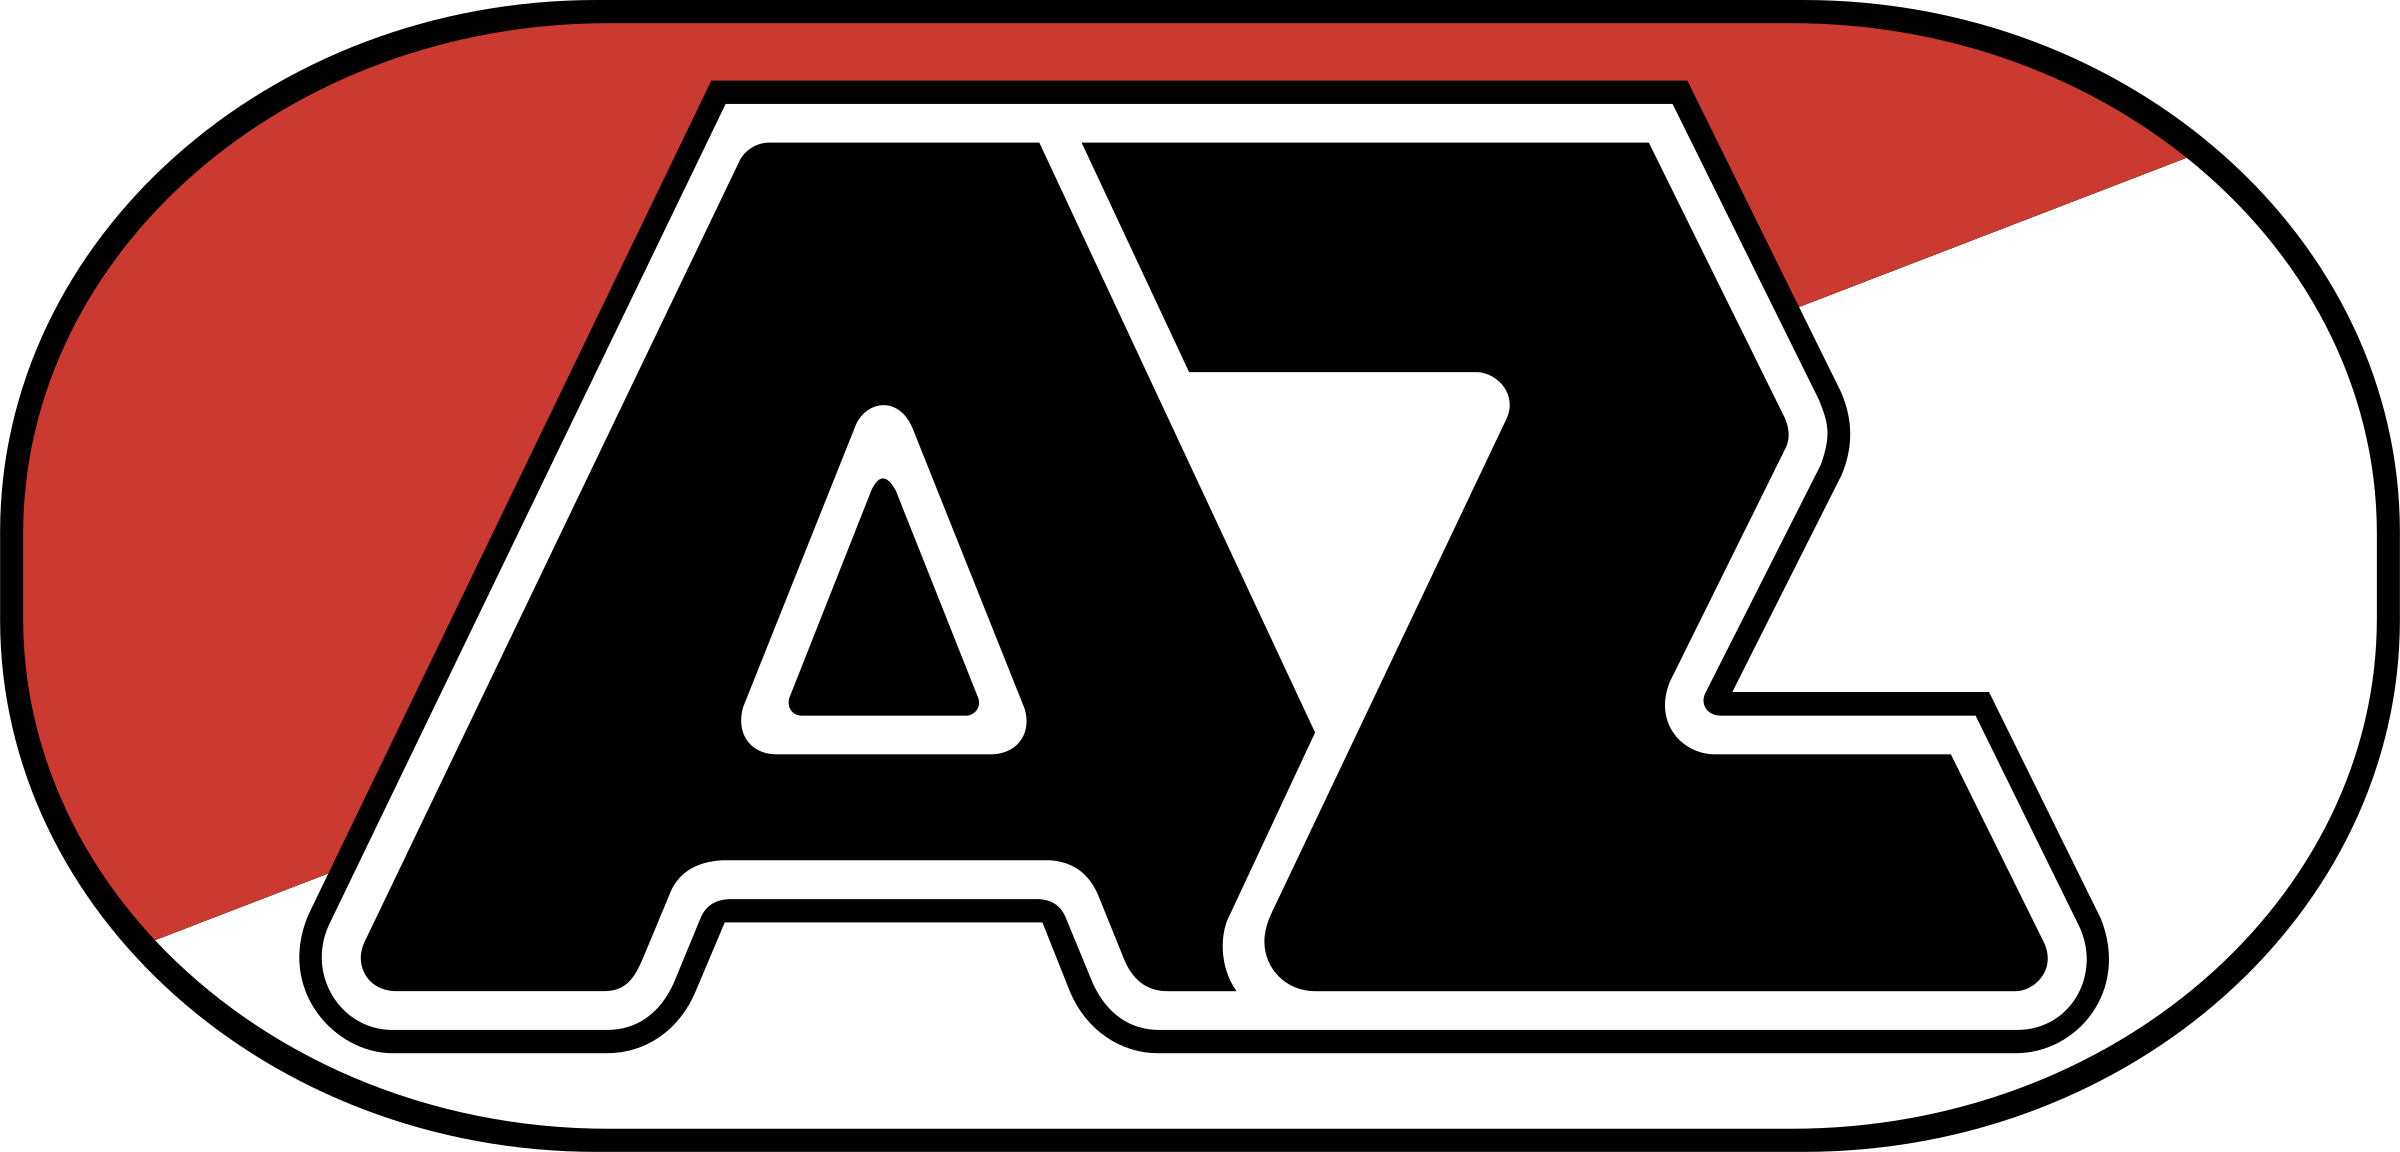 AZ Logo - AZ Logo PNG Transparent & SVG Vector - Freebie Supply